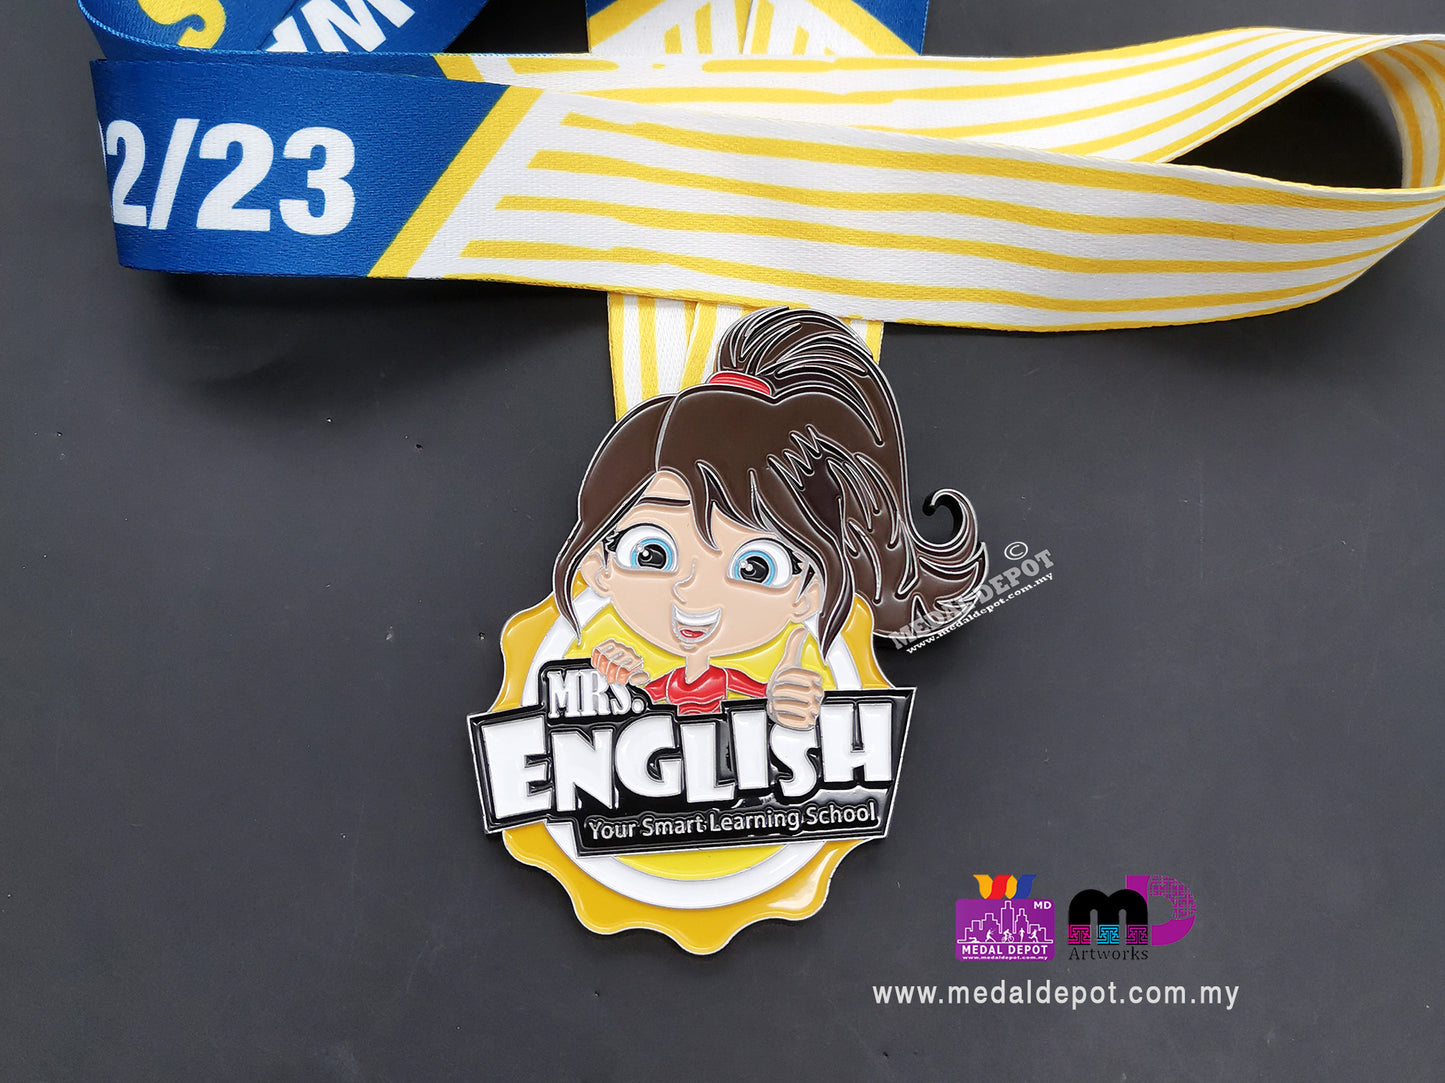 Mrs English 2022 medal